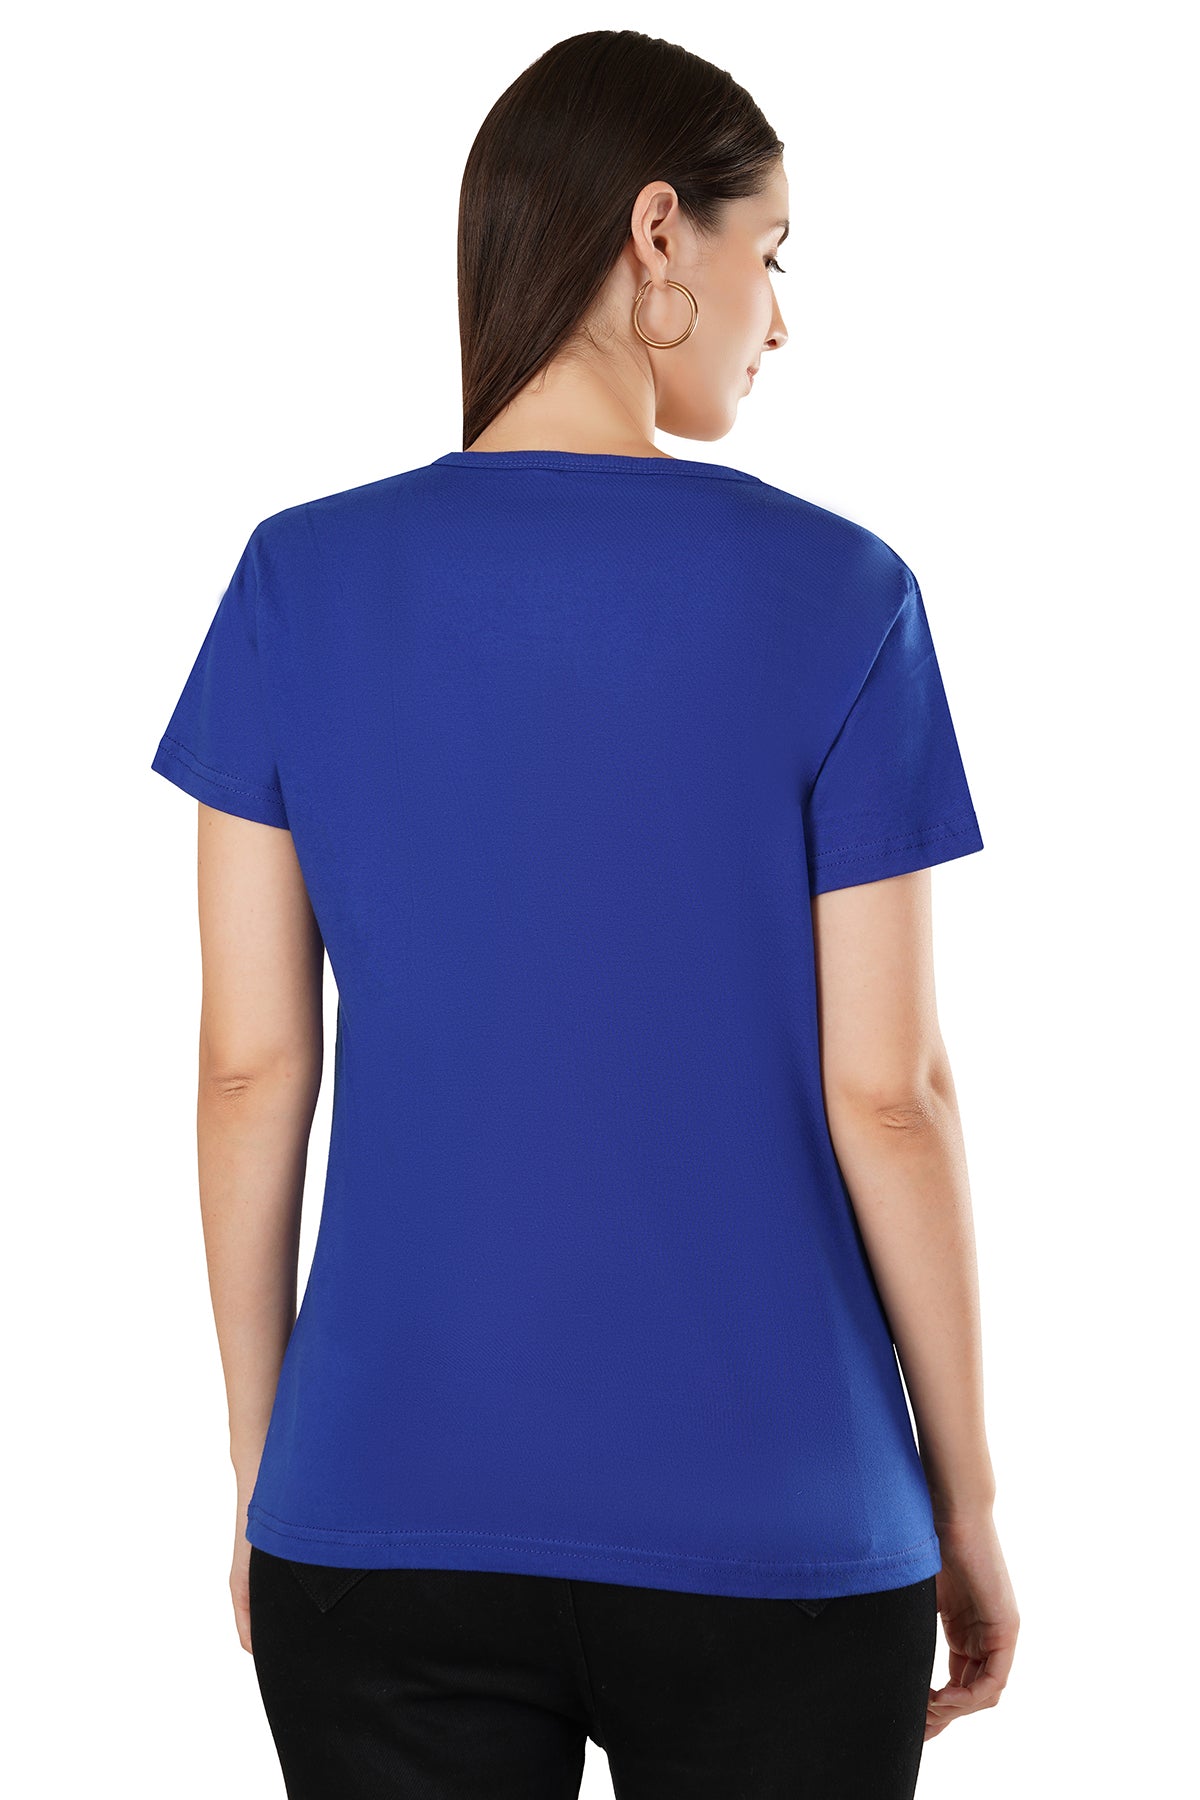 Women's Blue Printed T-Shirt